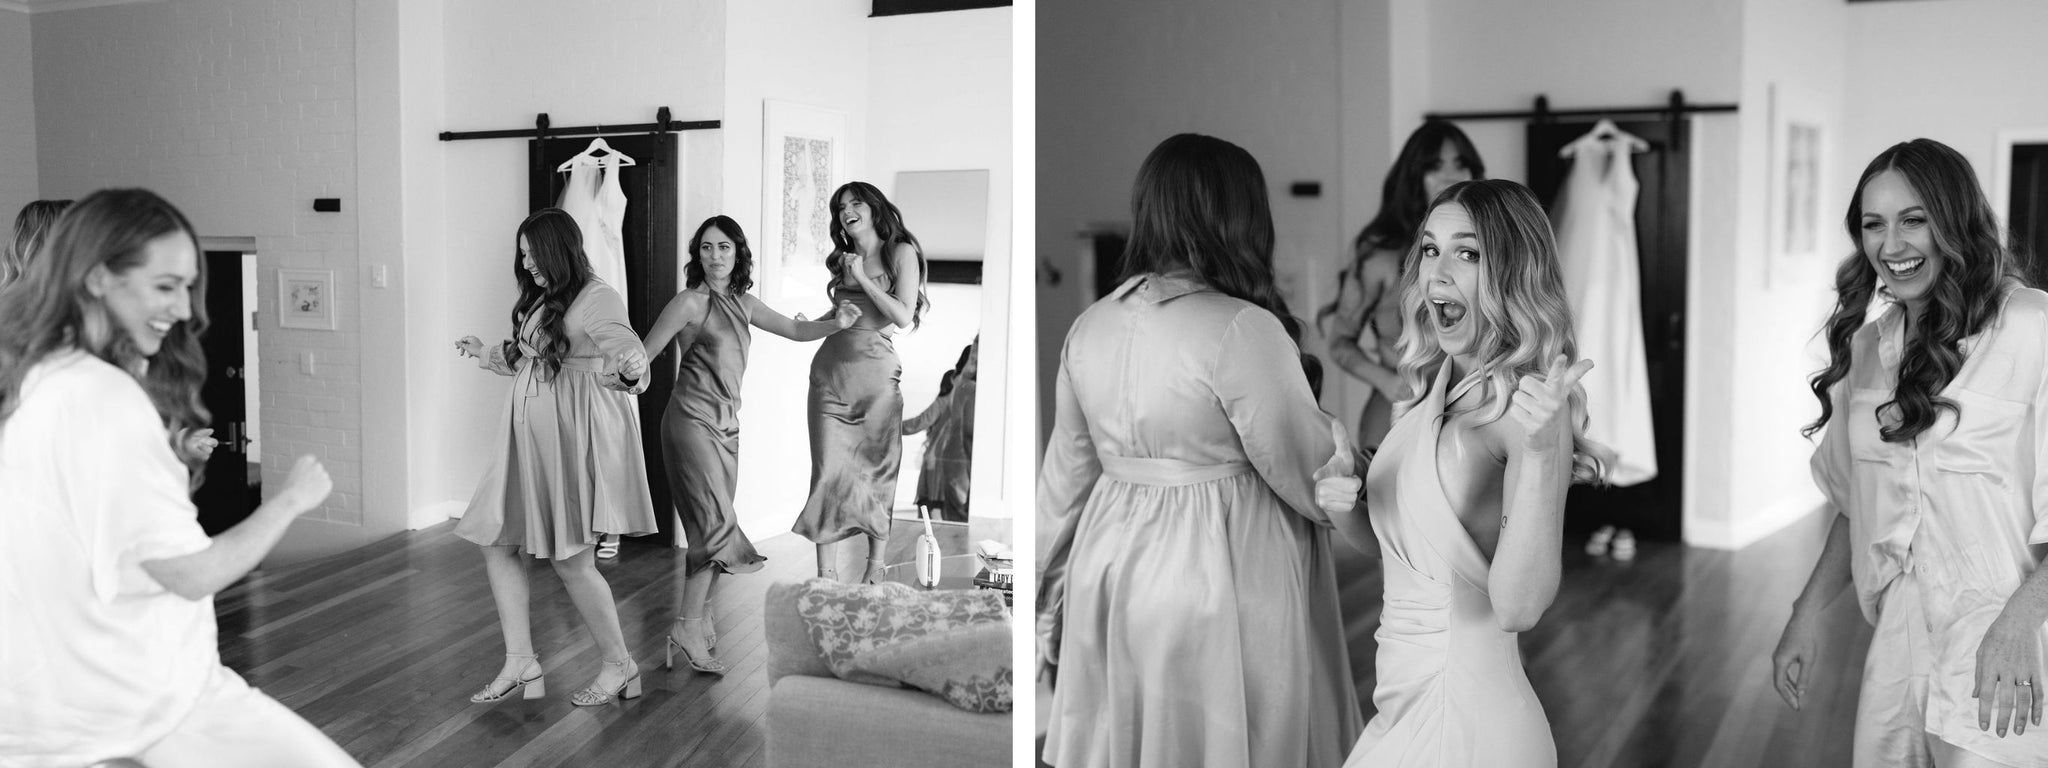 Jennifer's Bridesmaids Getting Ready AlexCohenPhotography